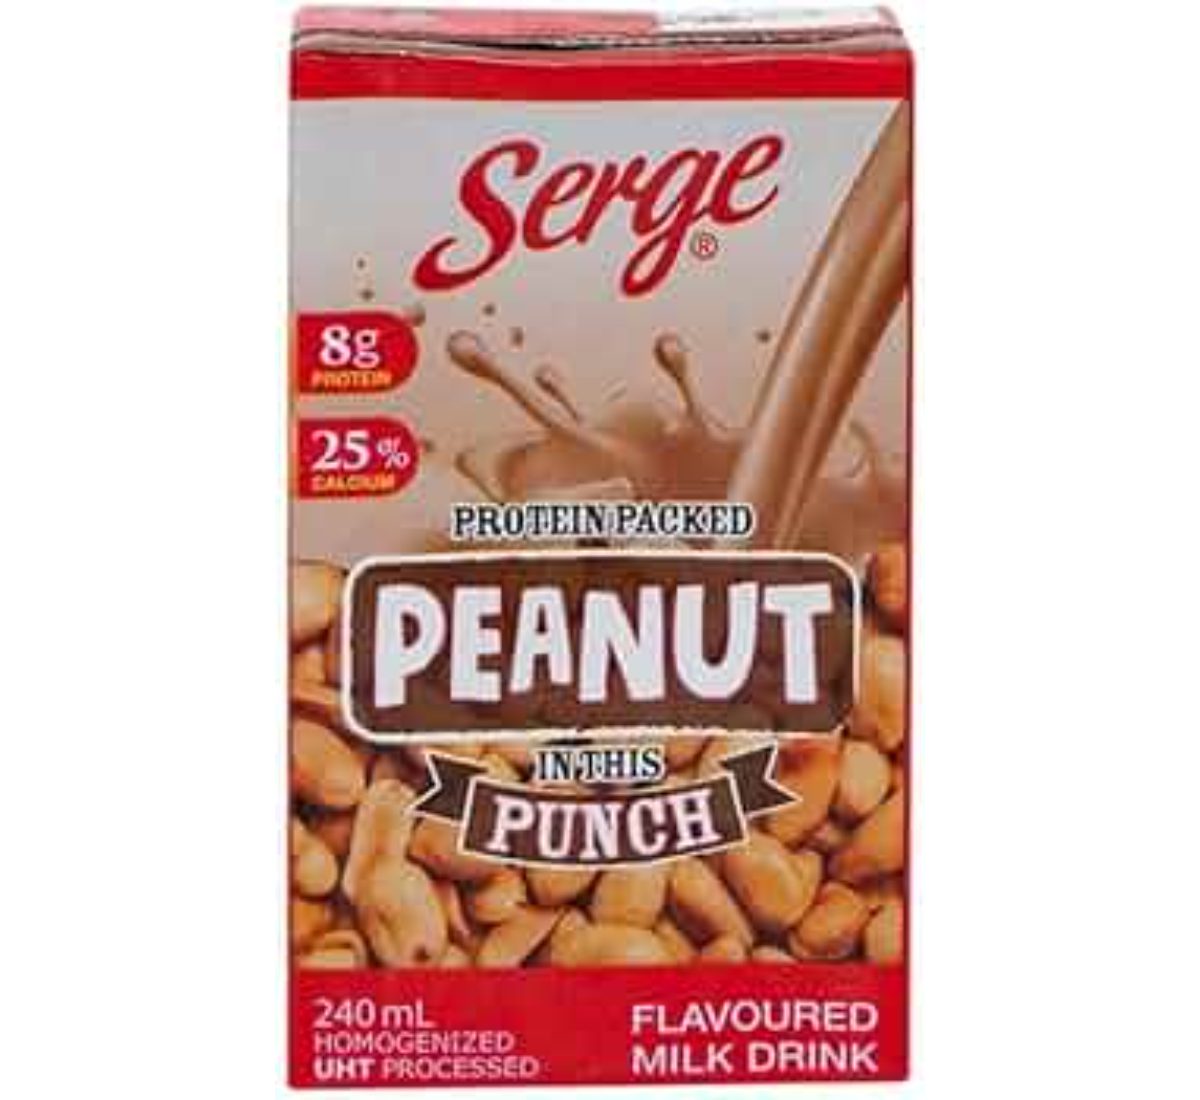 Sege Peanut Punch Flavoured Milk Drink 250ml (24 pack)